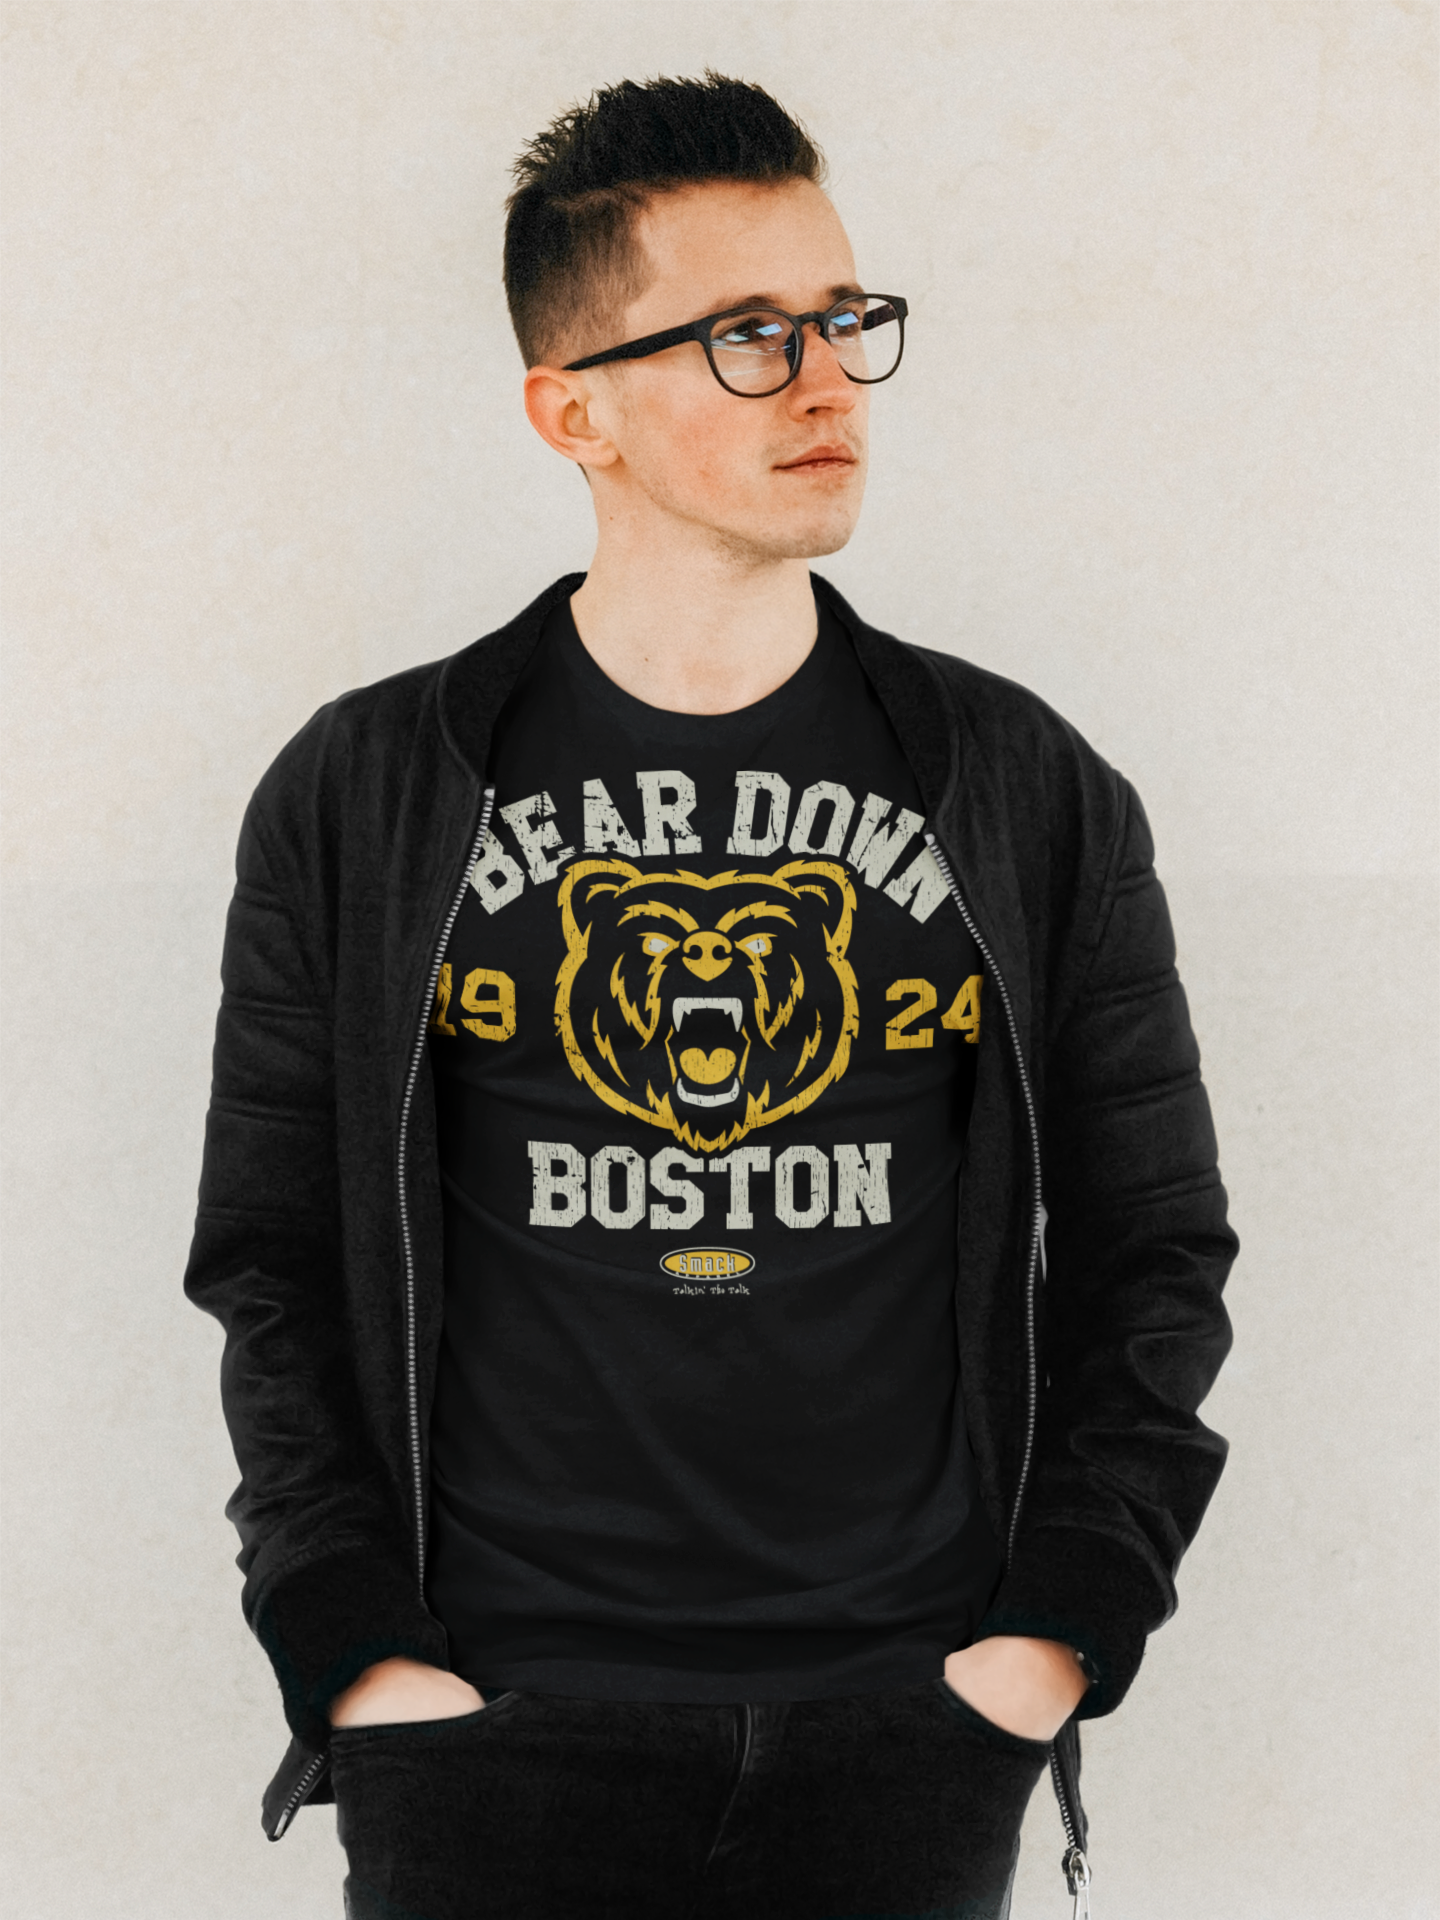 Boston Hockey Fans. Bear Down Boston. Heather Black T-Shirt (Sm-5X)